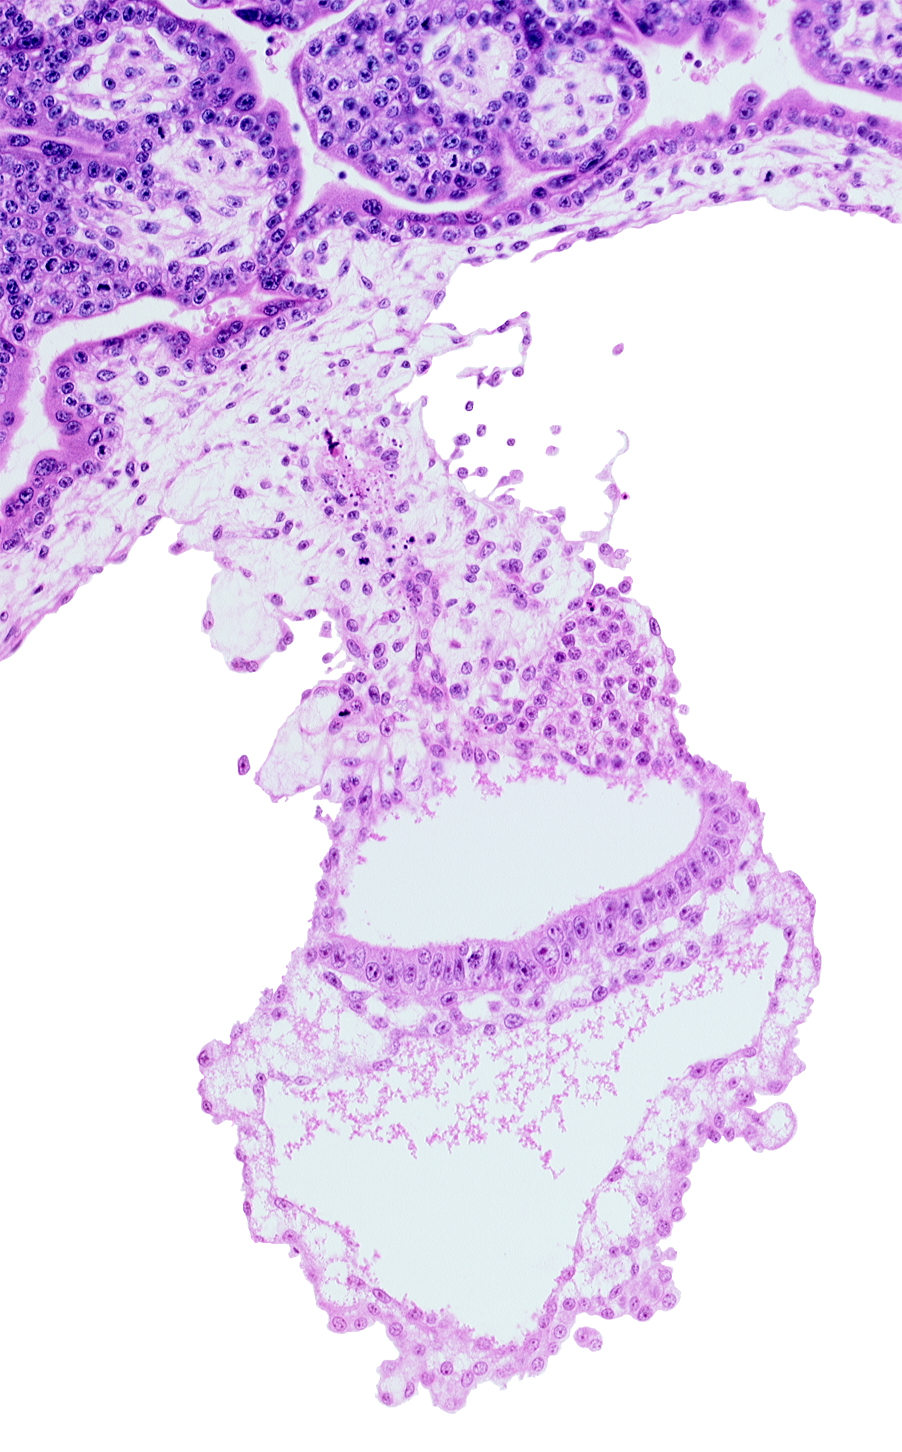 caudal part of amniotic duct, embryonic endoderm, embryonic mesoderm, epiblast, gastrulation (primitive) groove, hemangiogenic tissue, mesothelium, presumptive angioblastic tissue, primordial blood vessel(s)